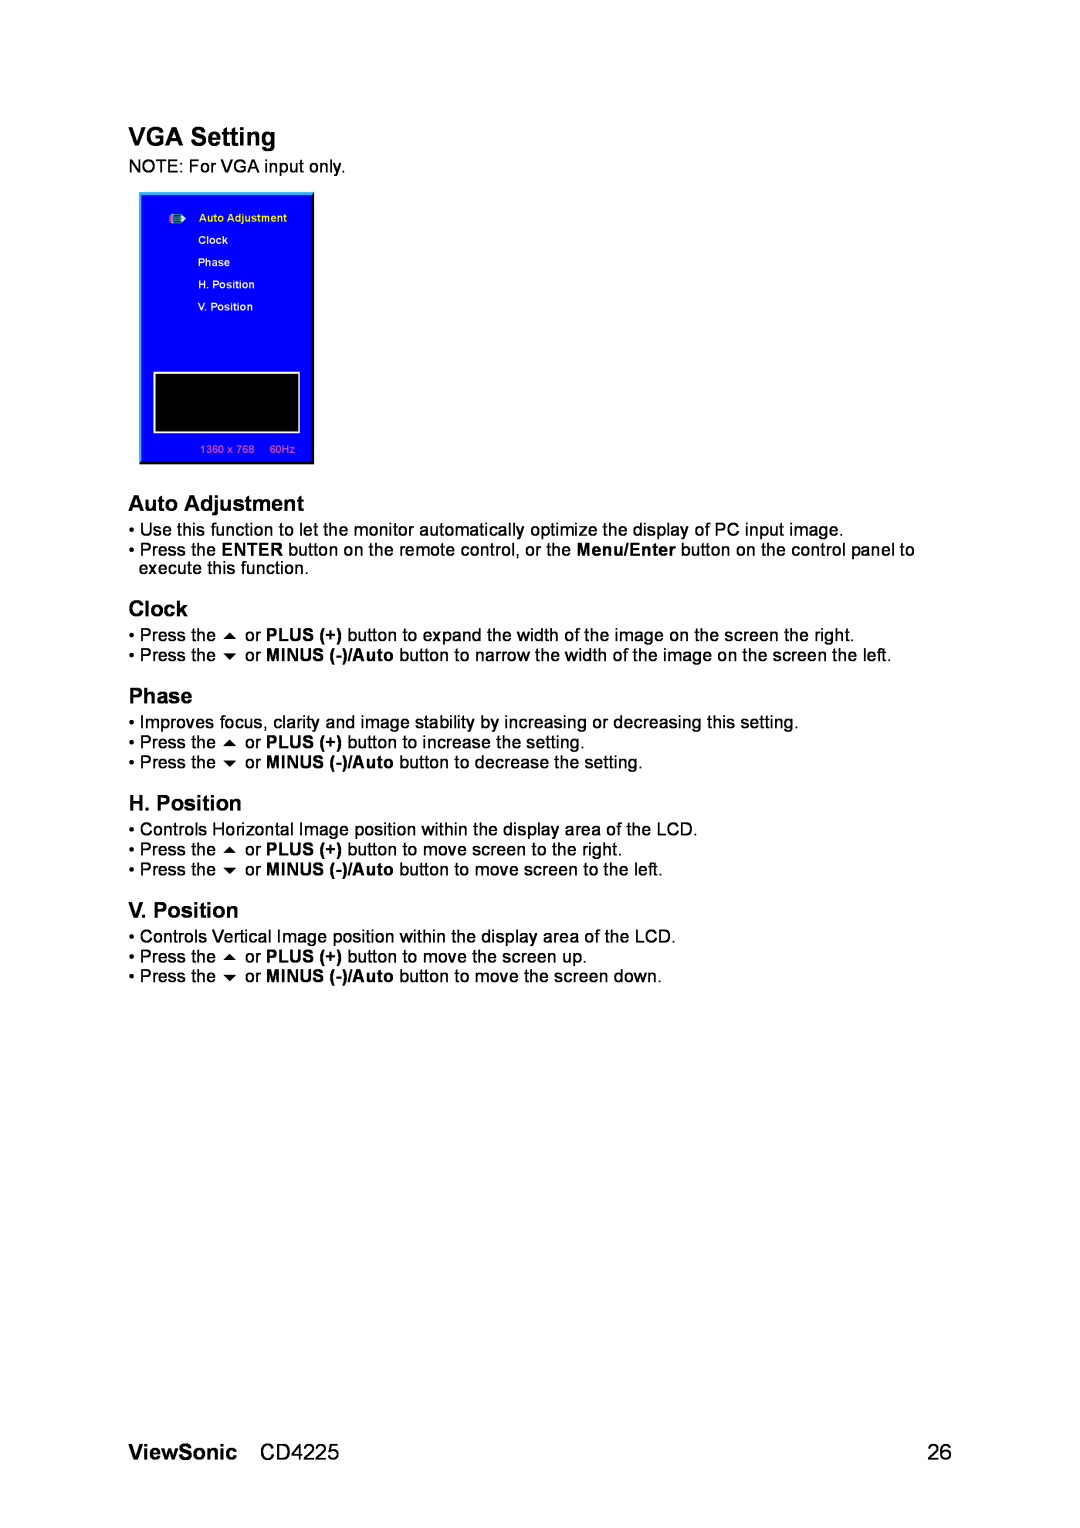 ViewSonic manual VGA Setting, Auto Adjustment, Clock, Phase, H. Position, V. Position, ViewSonic CD4225 